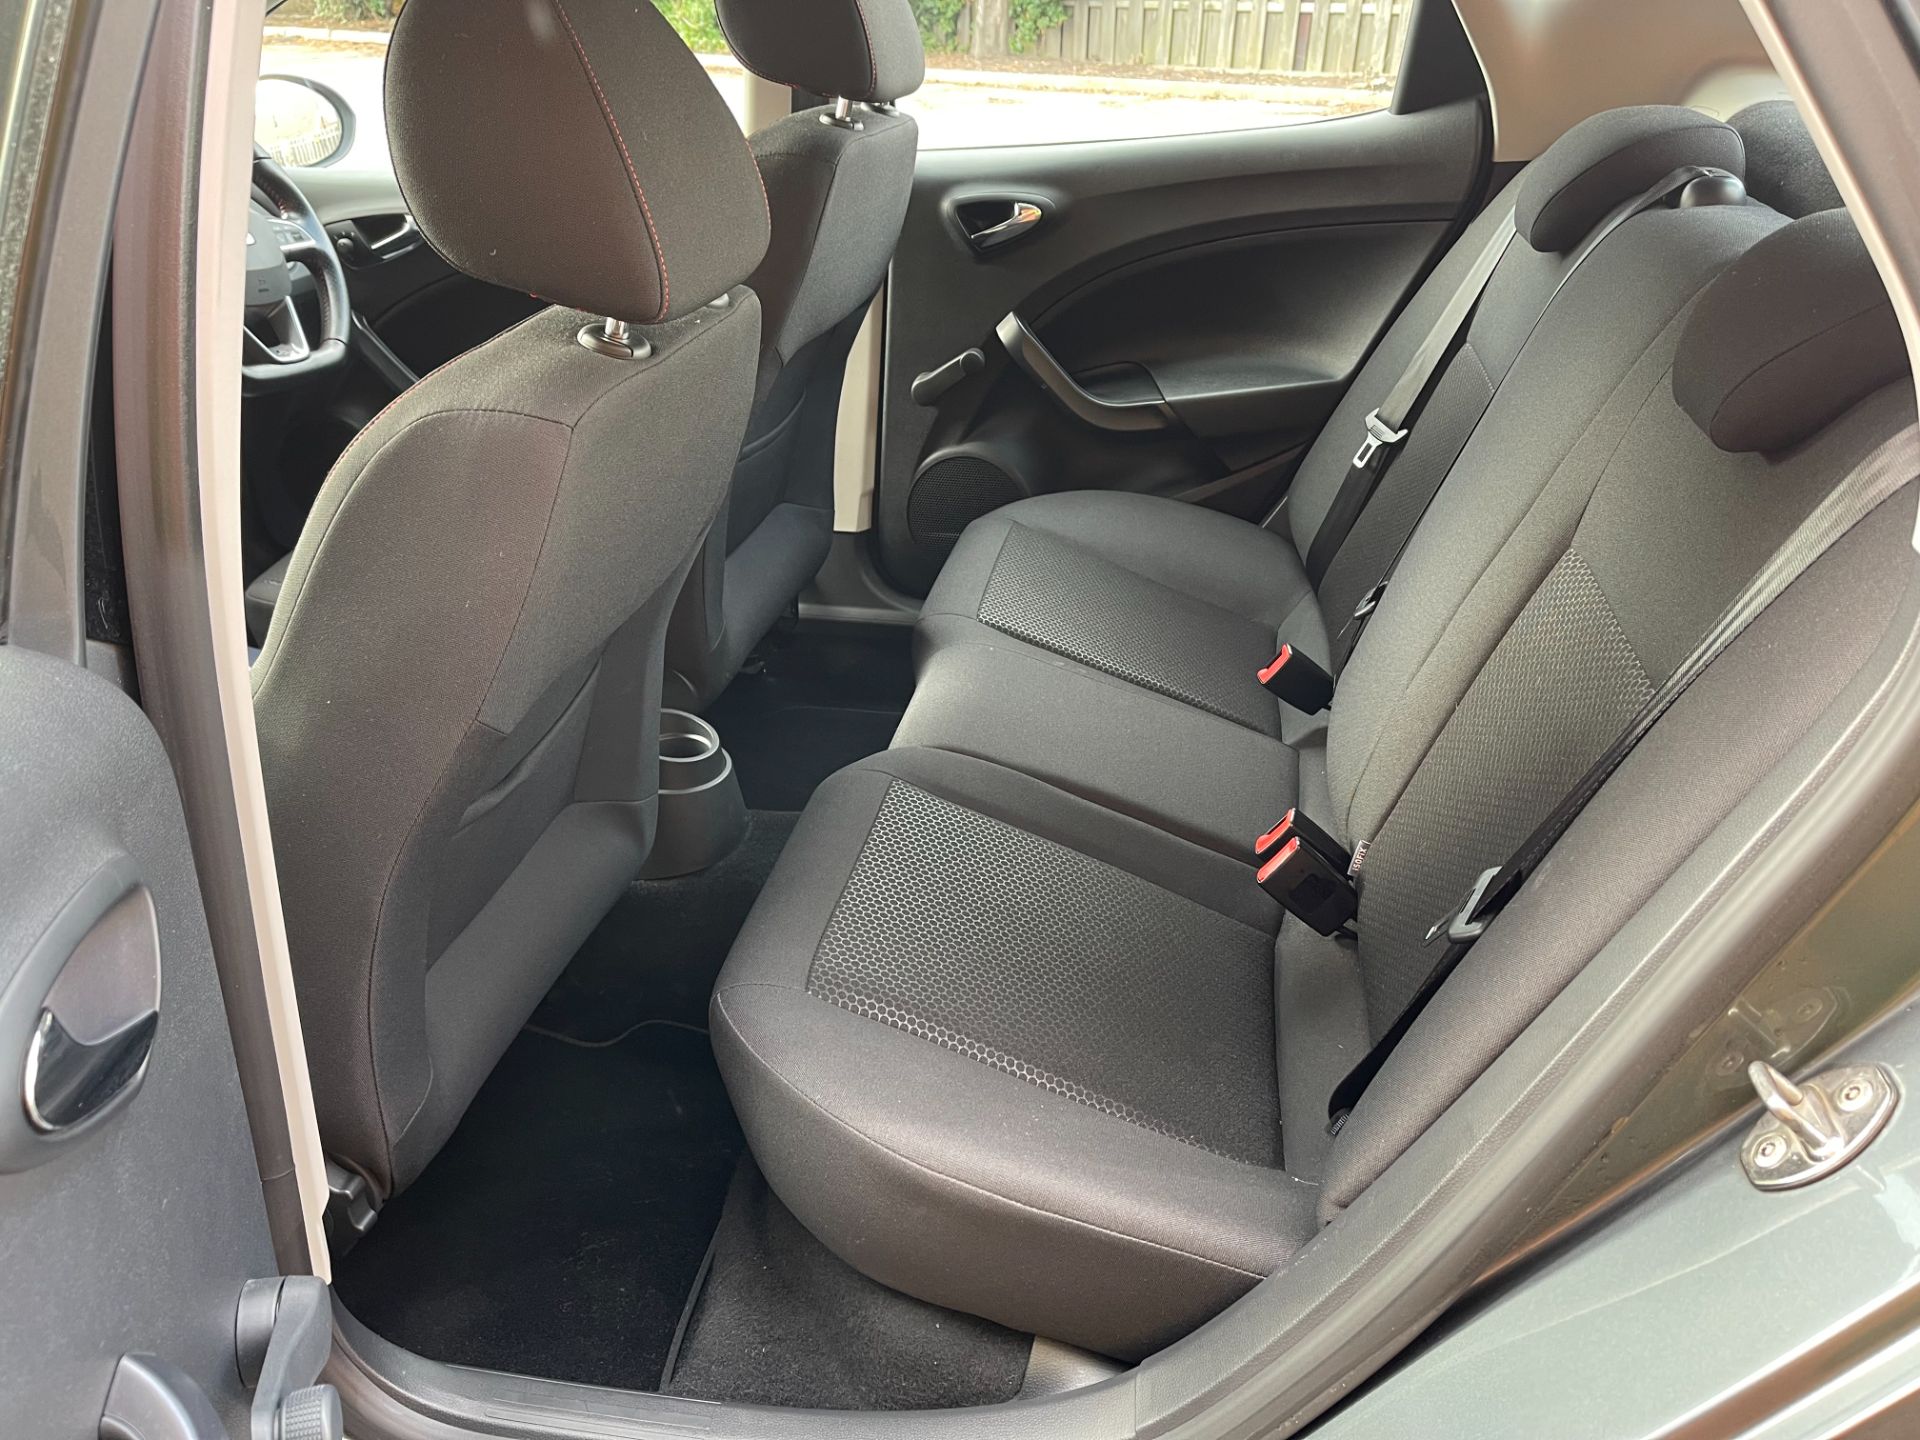 2016 Seat Ibiza 1.2 TSI 110 Fr 5Dr (YH16KZU) Image 16